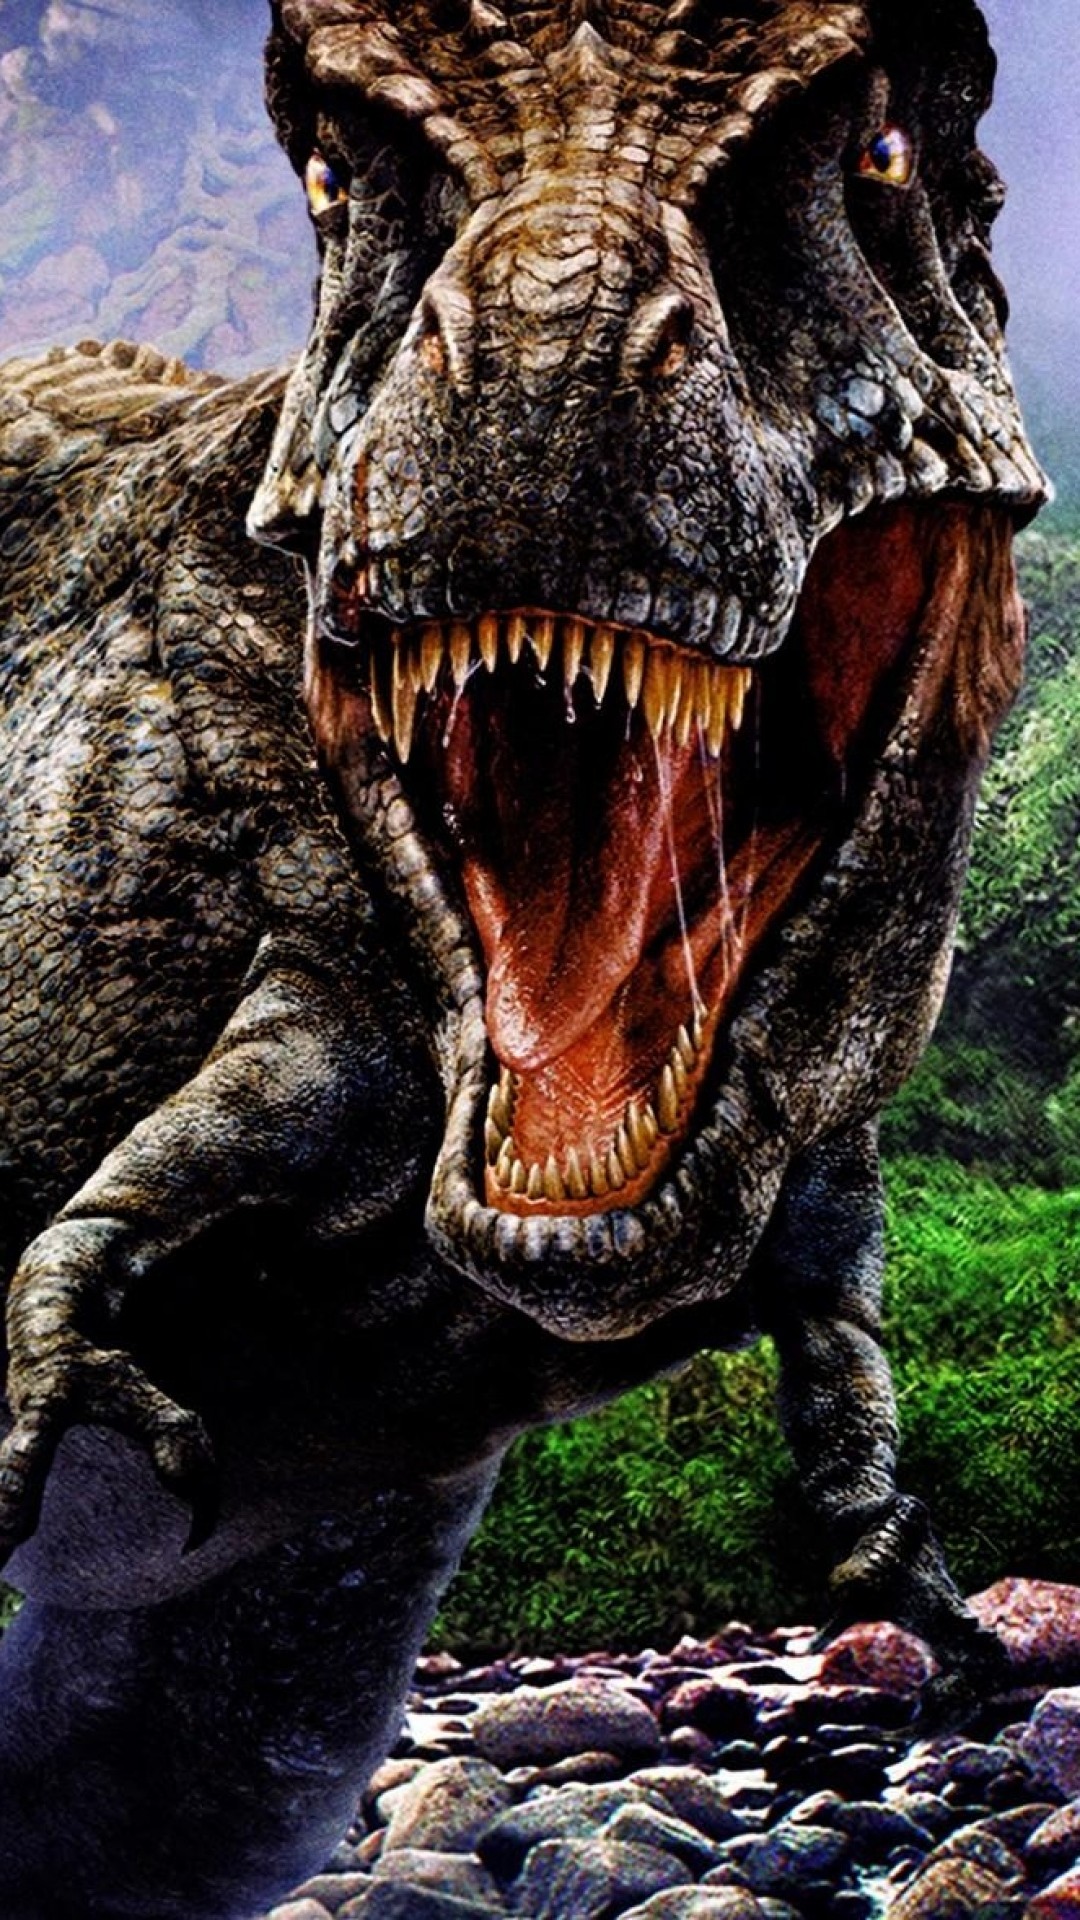 carnivores dinosaur hunter reborn download